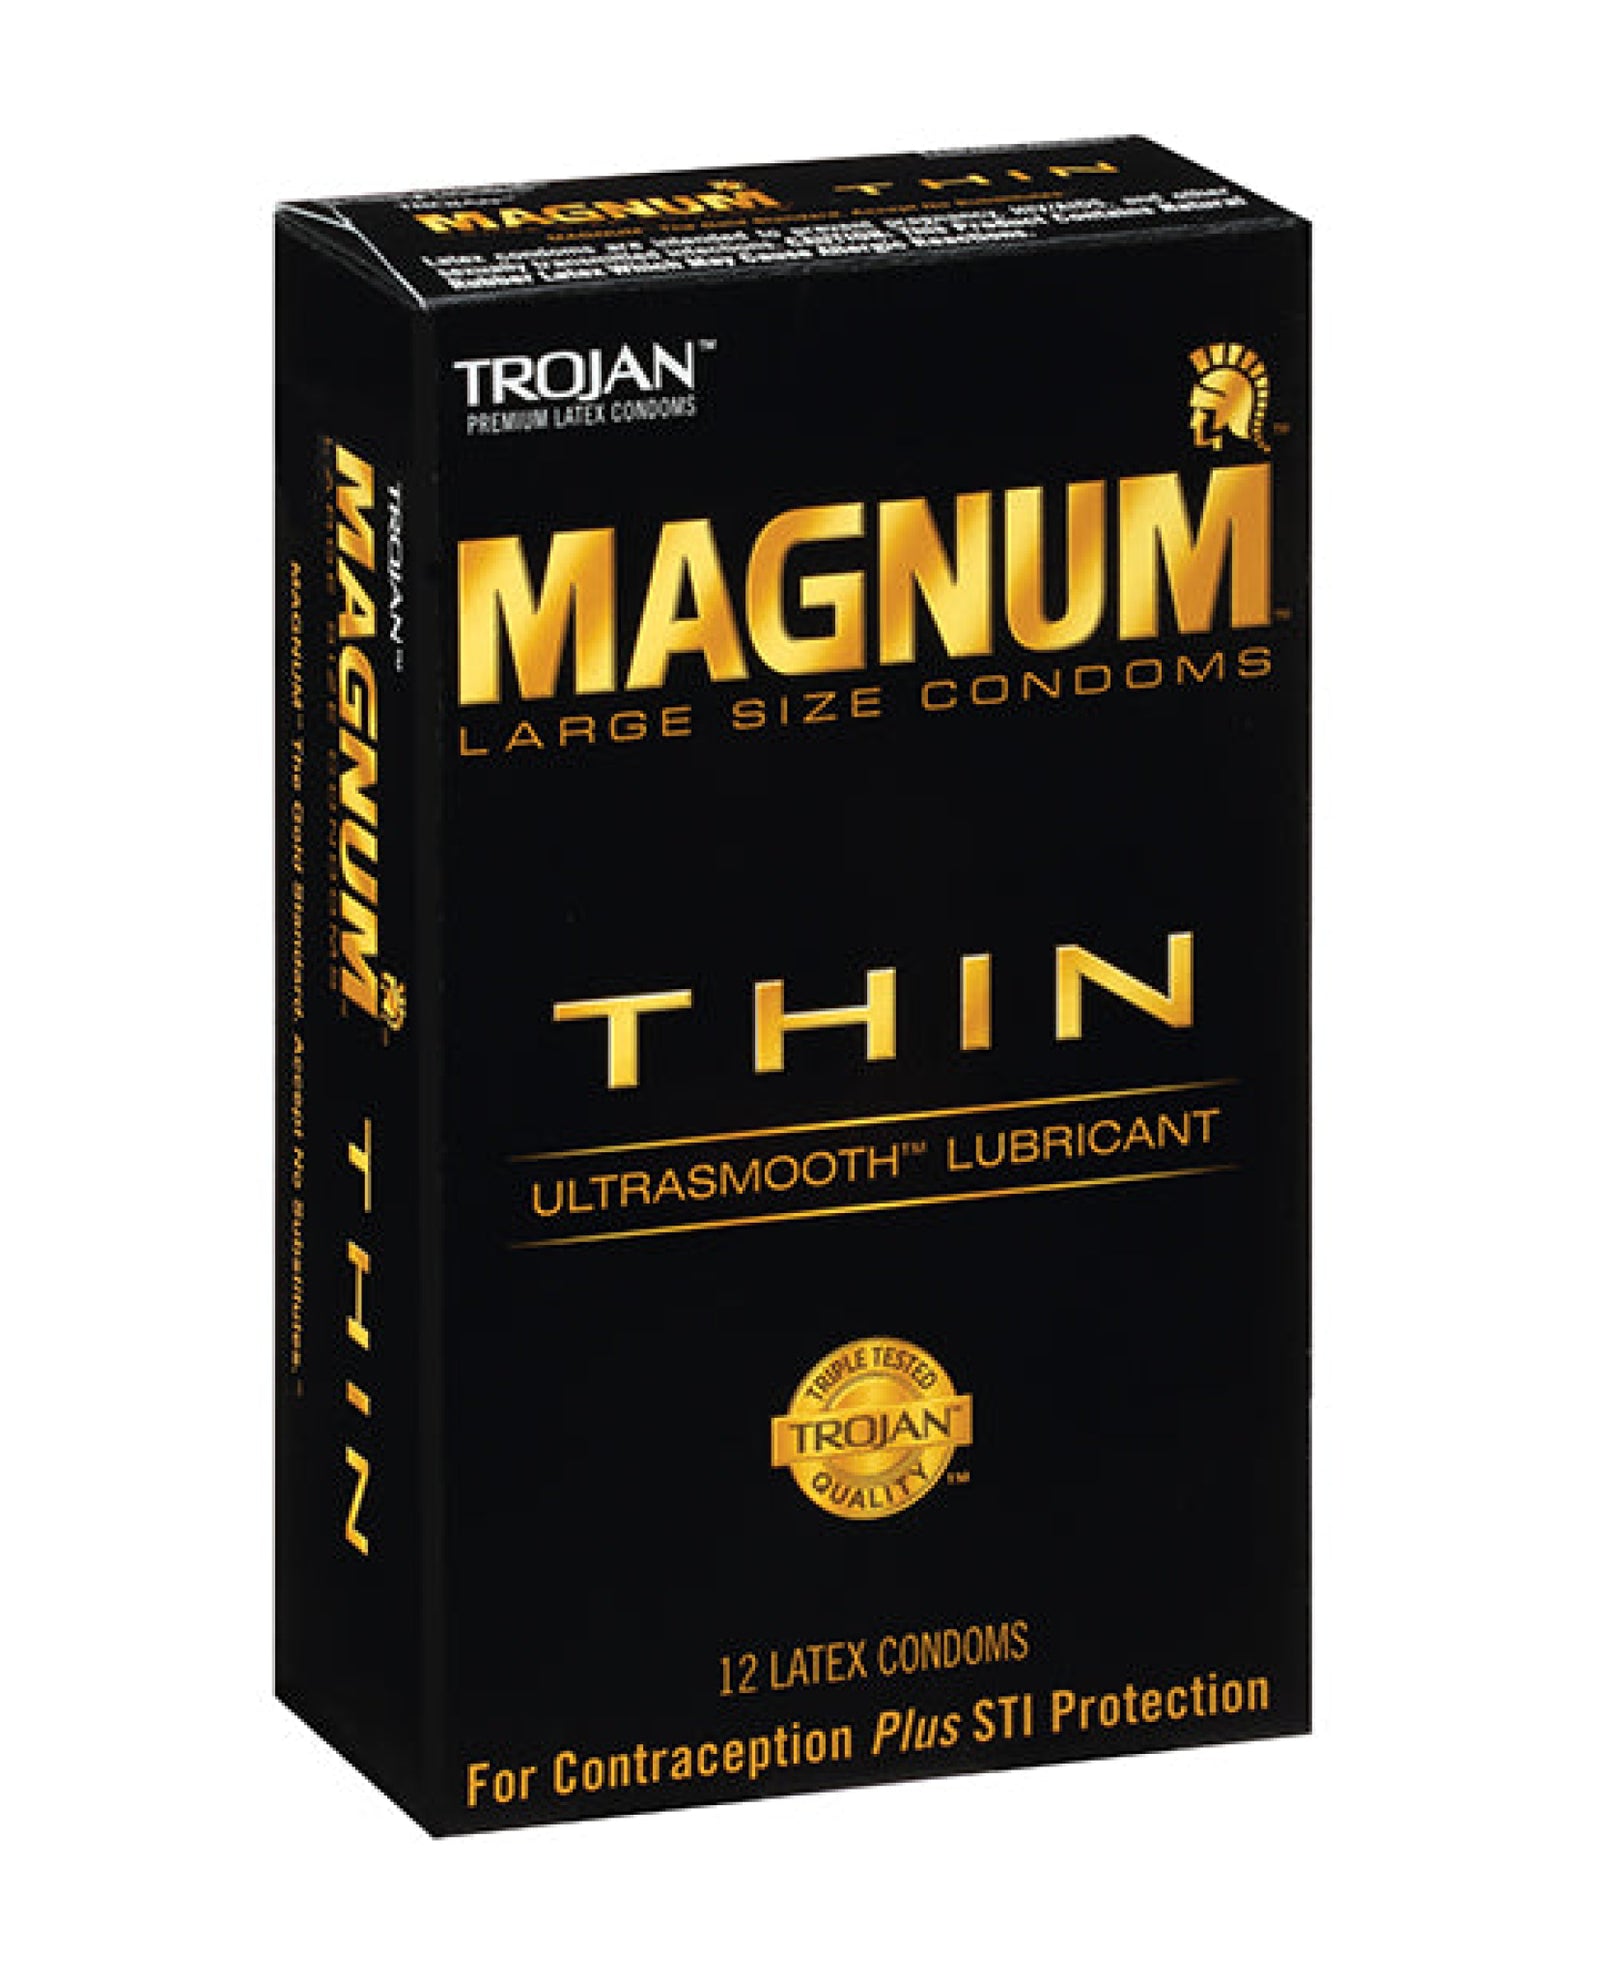 Trojan Magnum Thin Condom - Pack of 12 Paradise Marketing